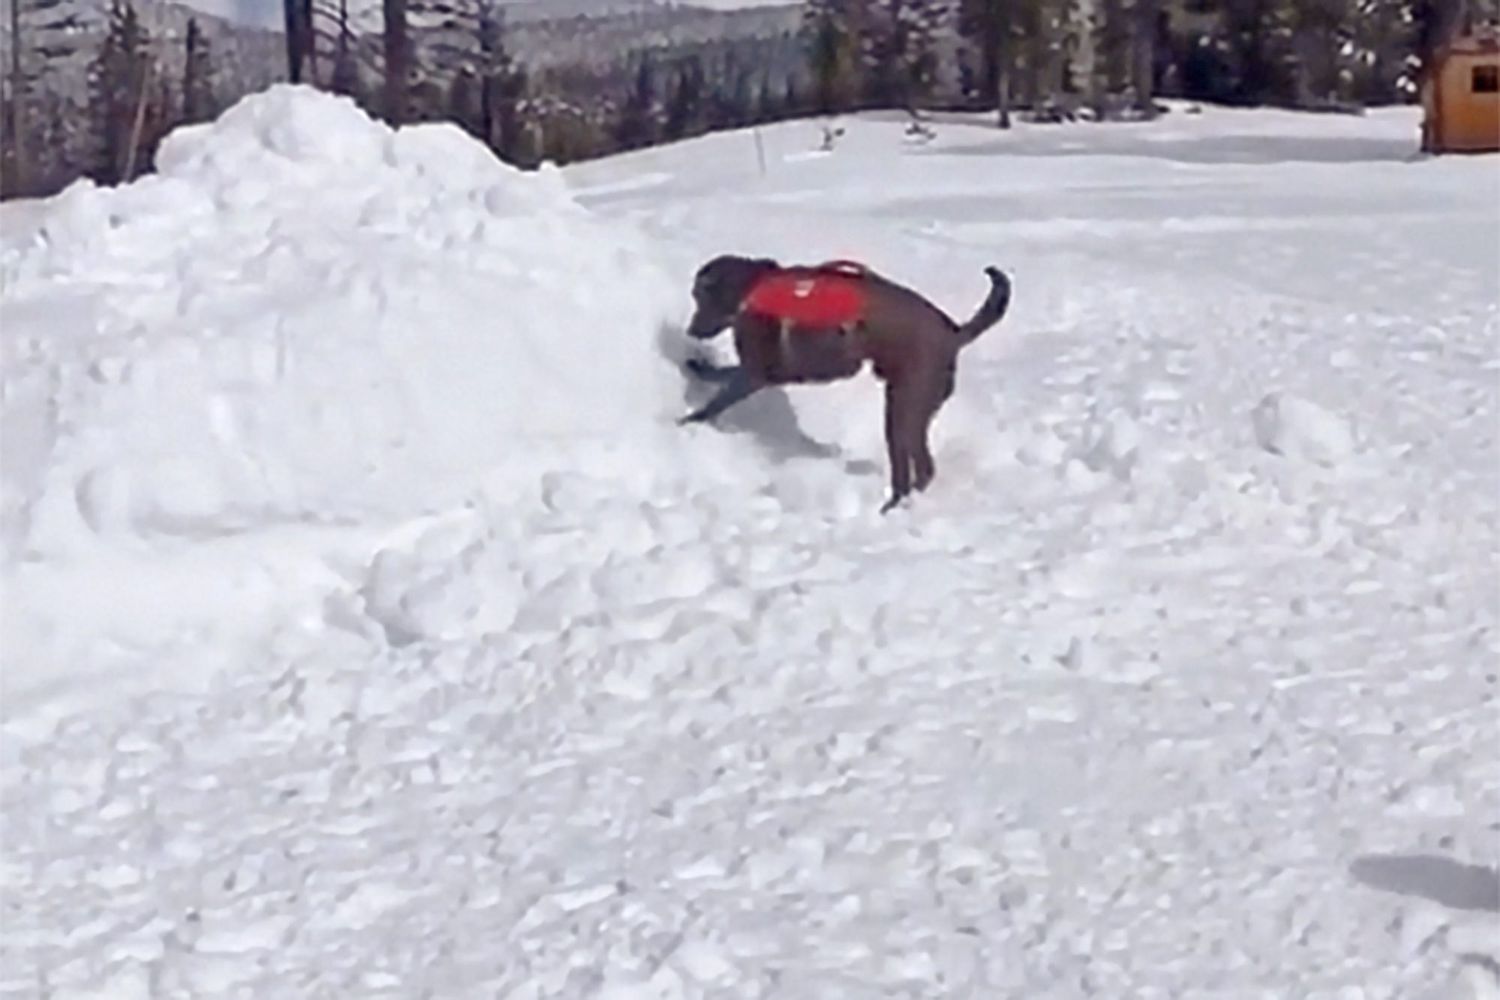 ski patrol dog digging through the snow